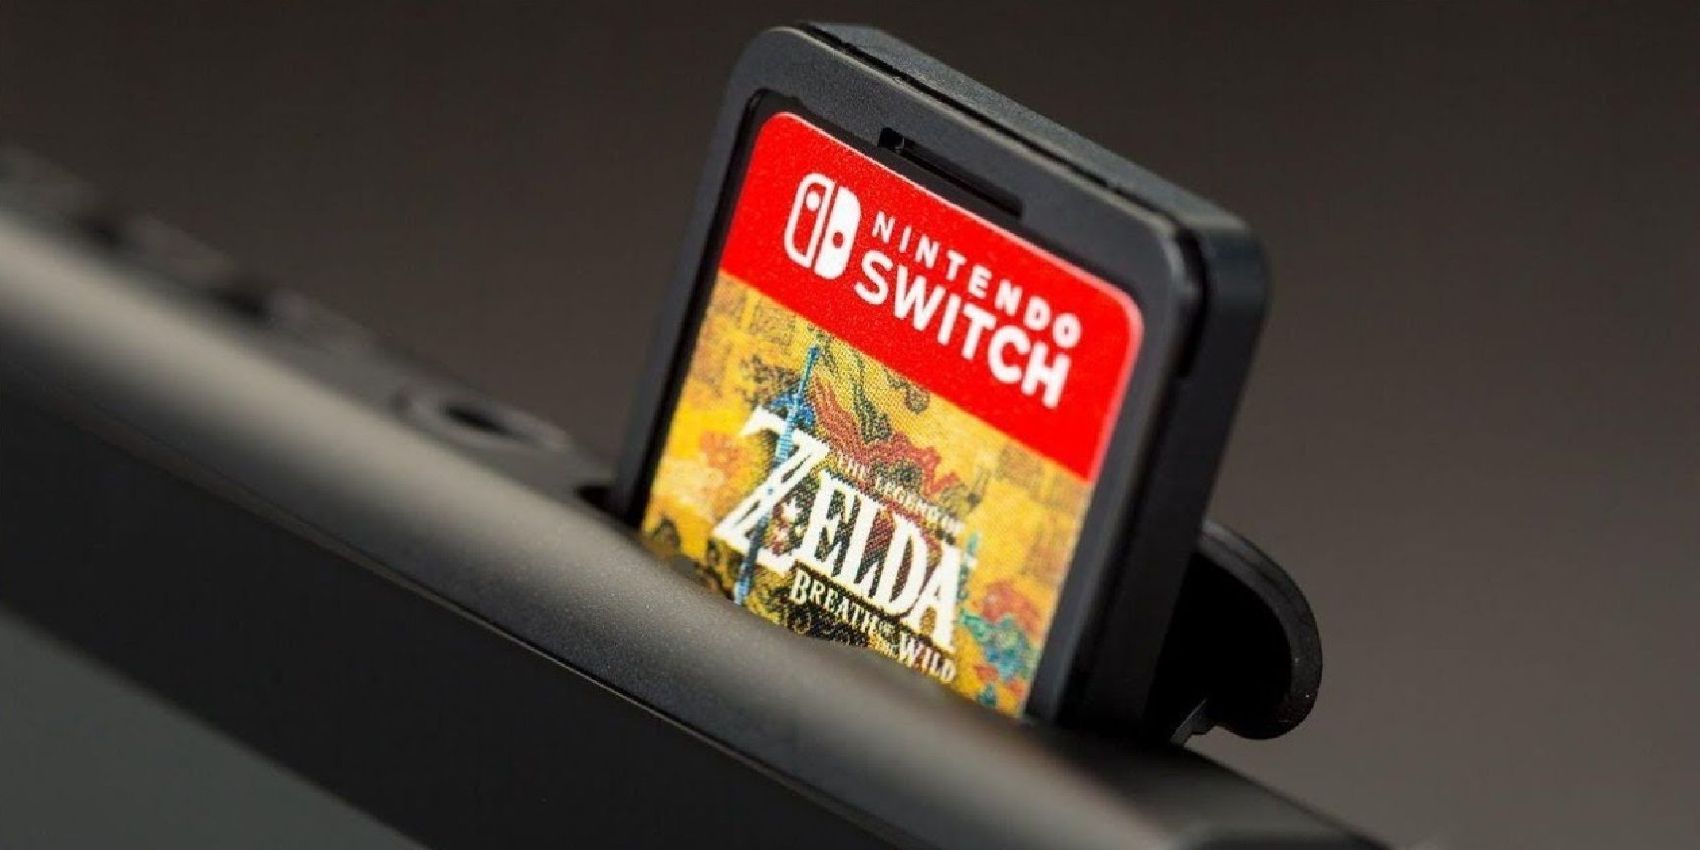 Nintendo switch игры картриджи. Nintendo Switch Cartridge. Картриджи на Нинтендо свитч олед. Nintendo Switch OLED картридж. Nintendo Switch Cartridge Box.